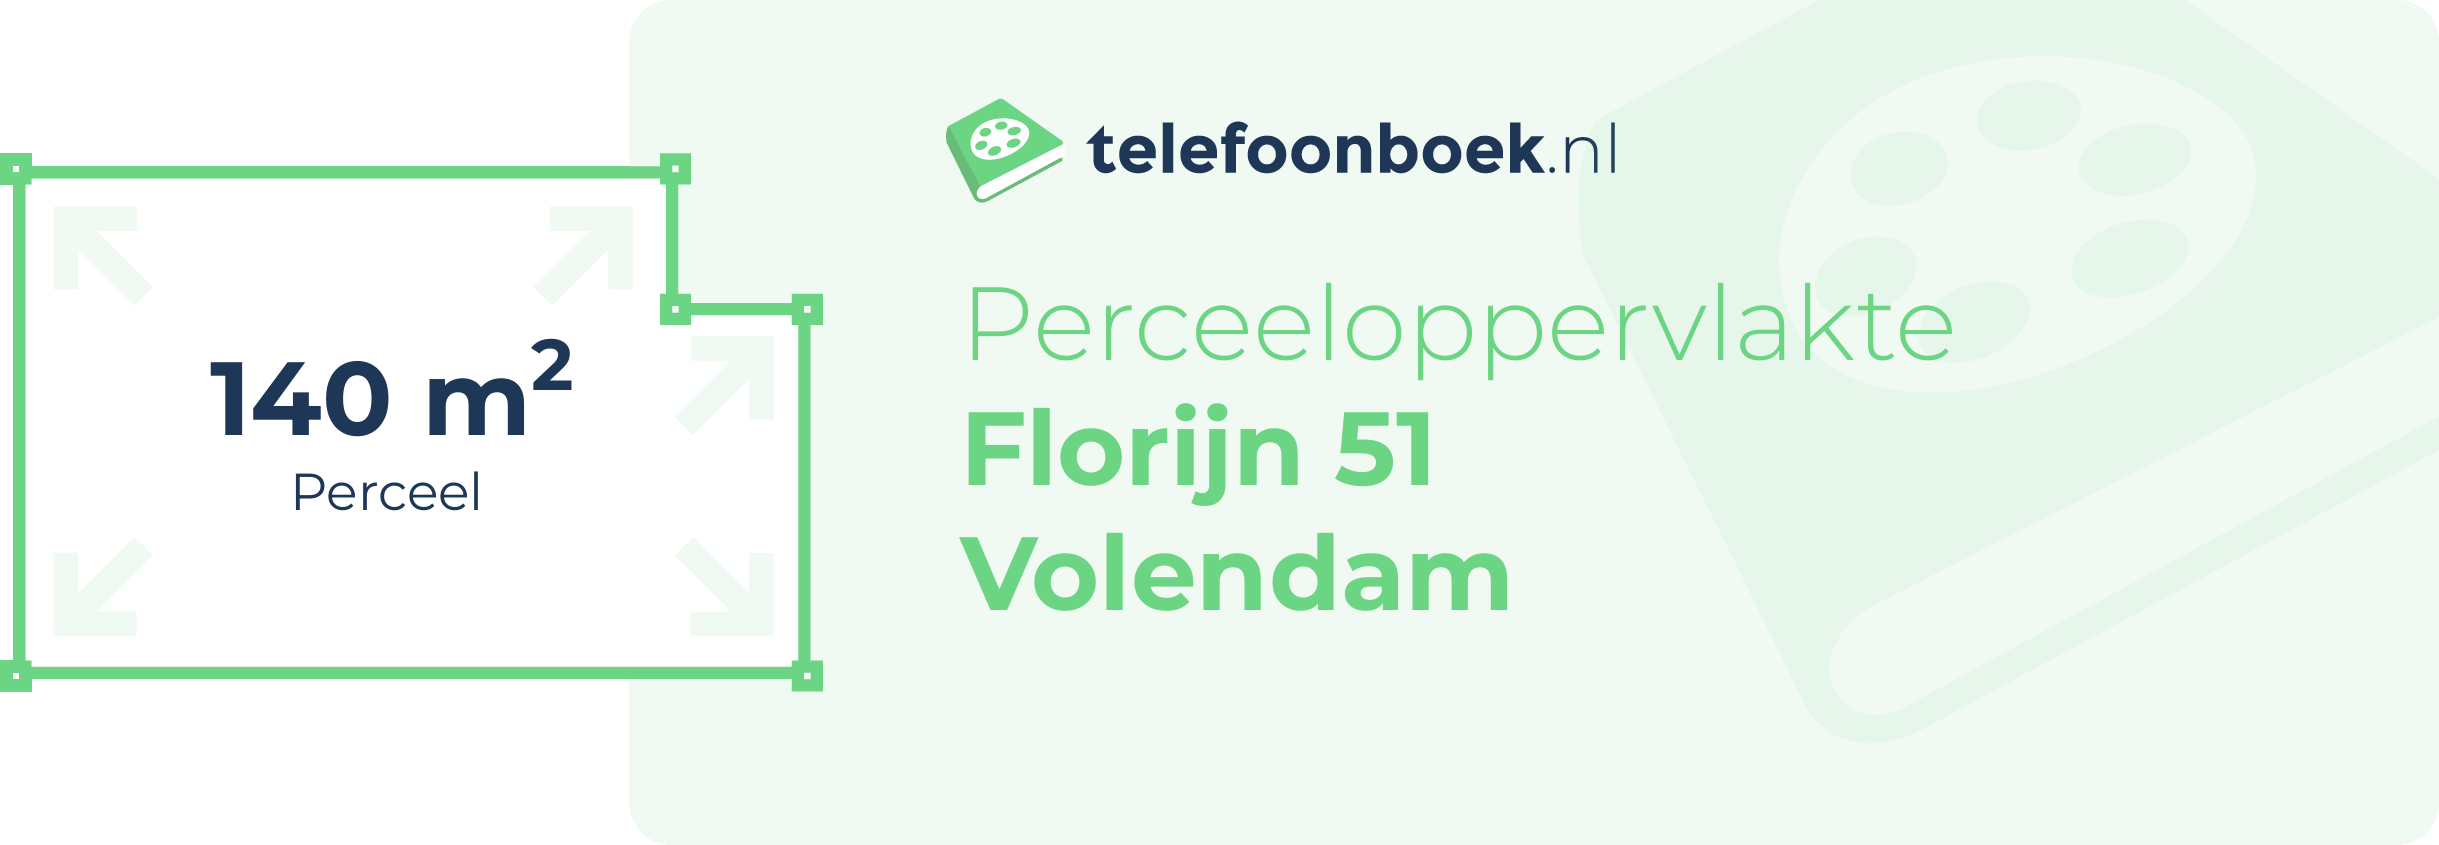 Perceeloppervlakte Florijn 51 Volendam